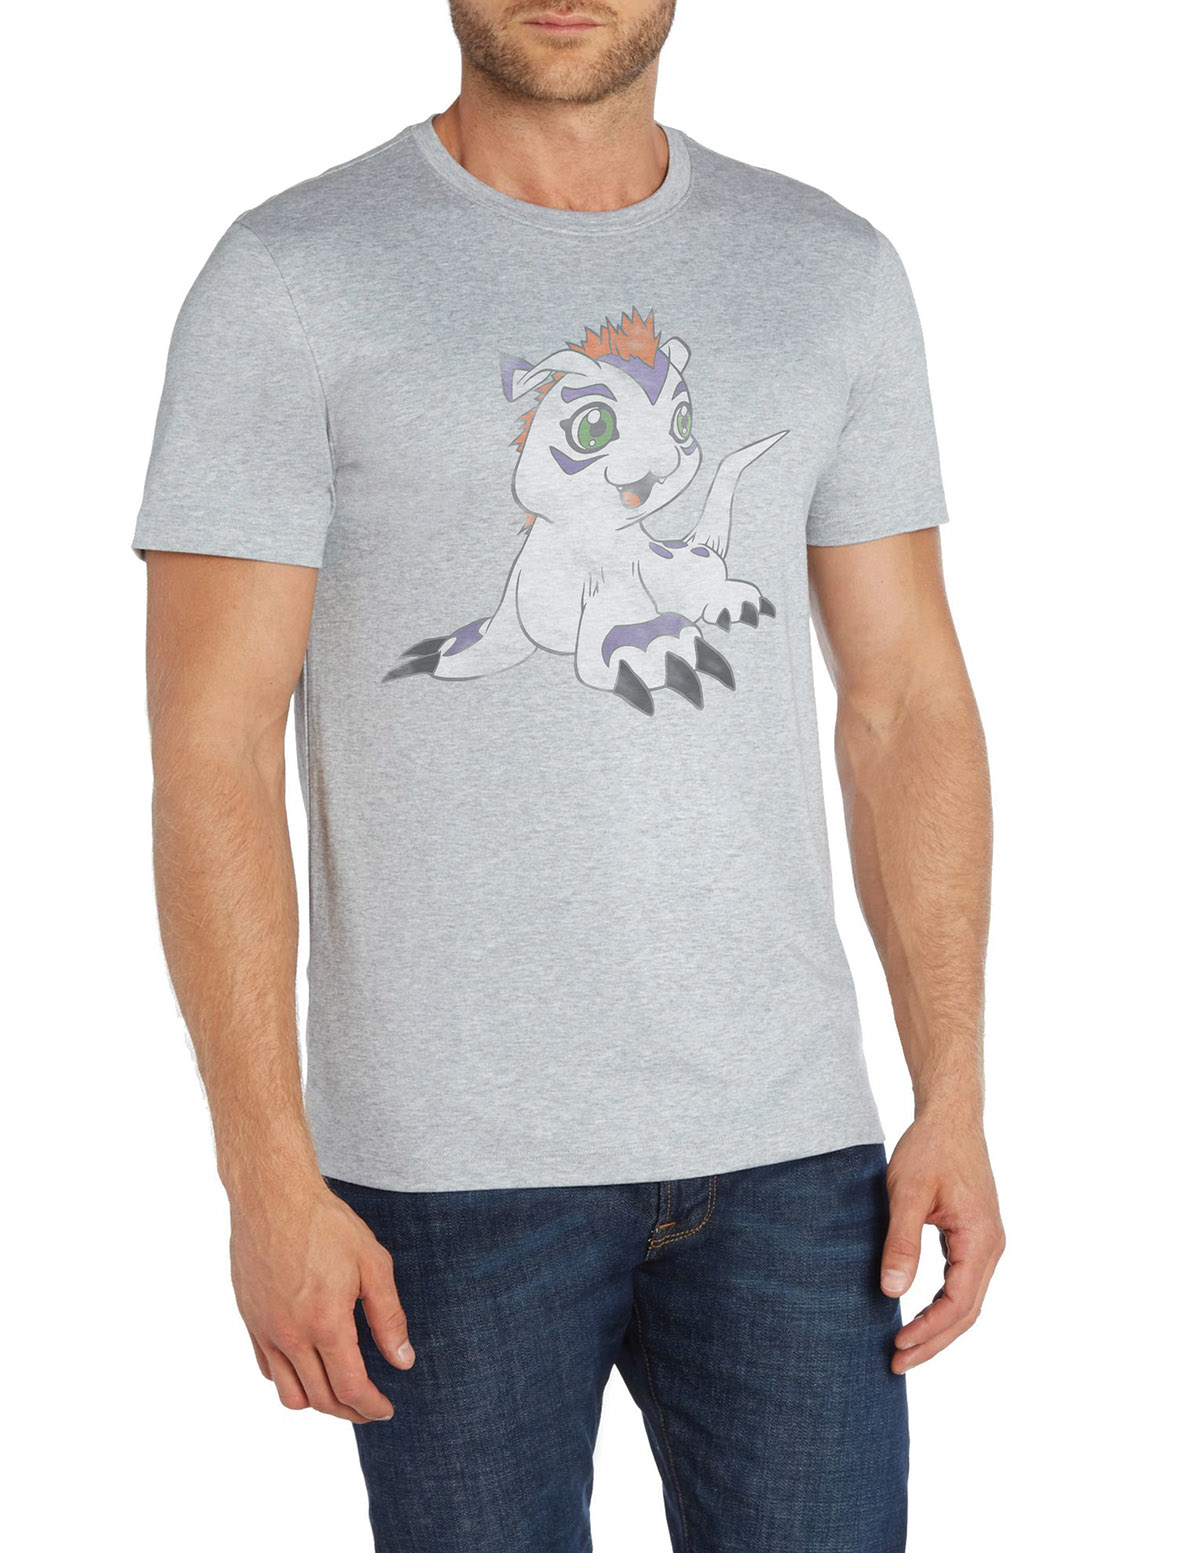 Digimon t-shirt